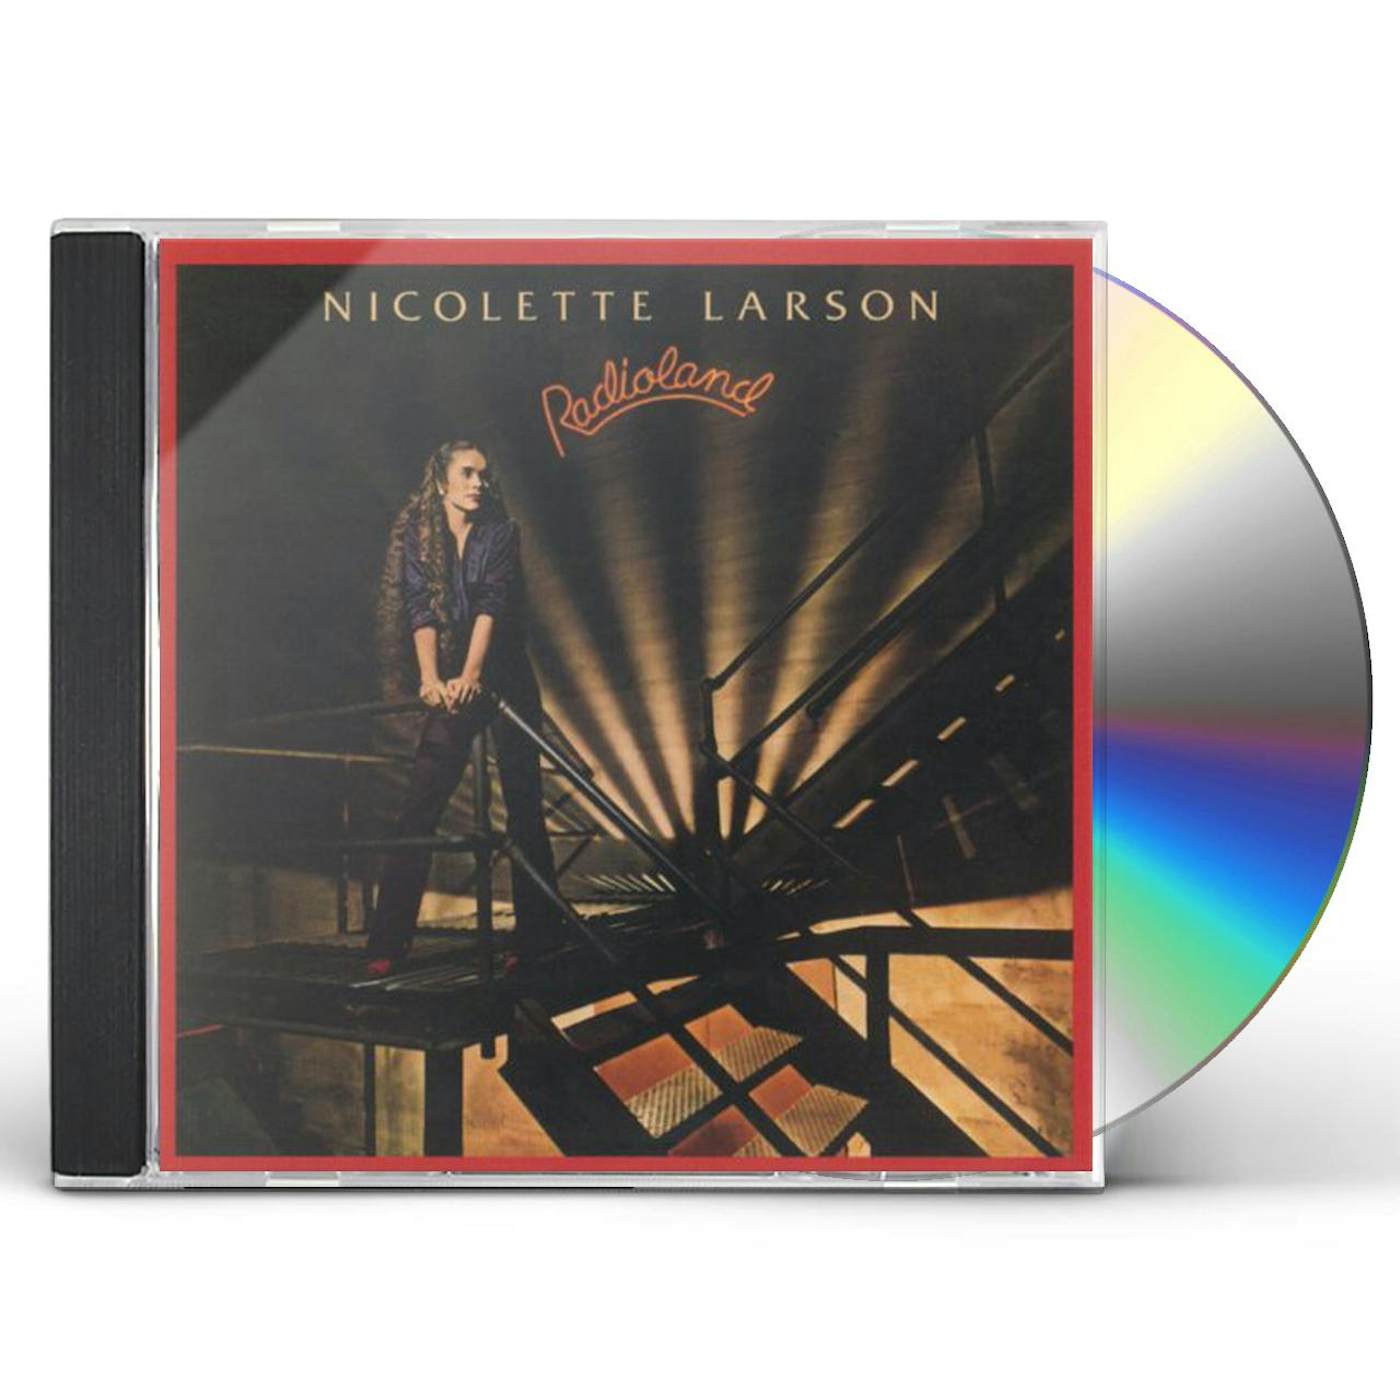 Nicolette Larson RADIOLAND CD